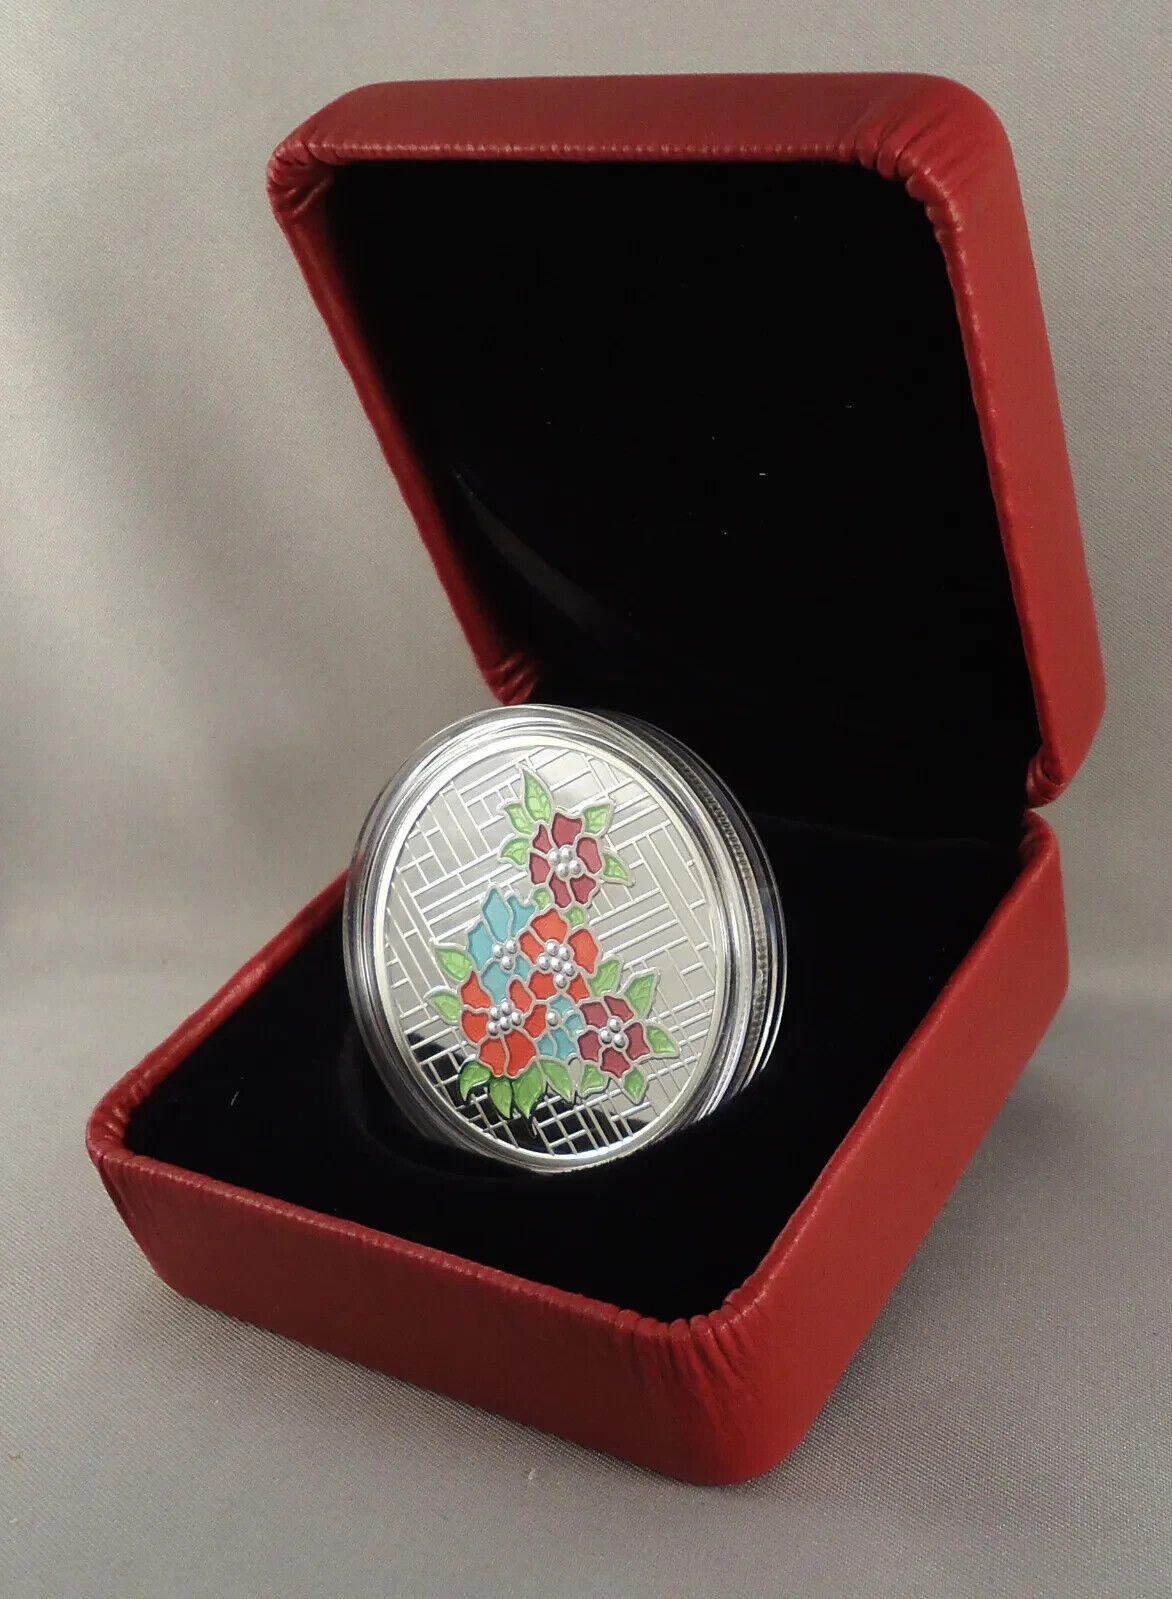 1 Oz Silver Coin 2014 Canada $20 Stained Glass: Craigdarroch Castle Enamel-classypw.com-4